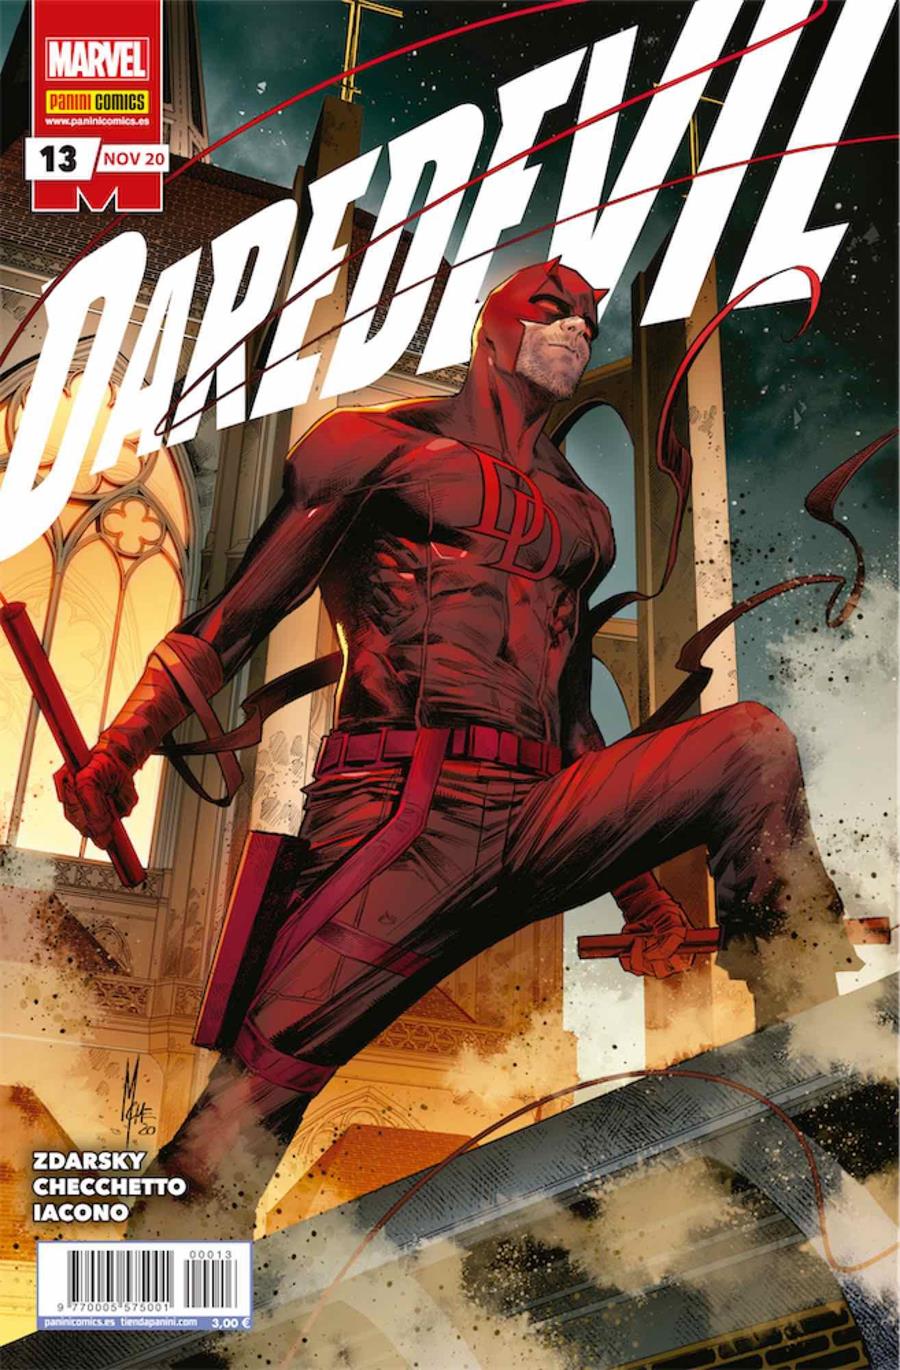 Daredevil 13 | N1120-PAN12 | Chip Zdarsky, Marco Checchetto | Terra de Còmic - Tu tienda de cómics online especializada en cómics, manga y merchandising